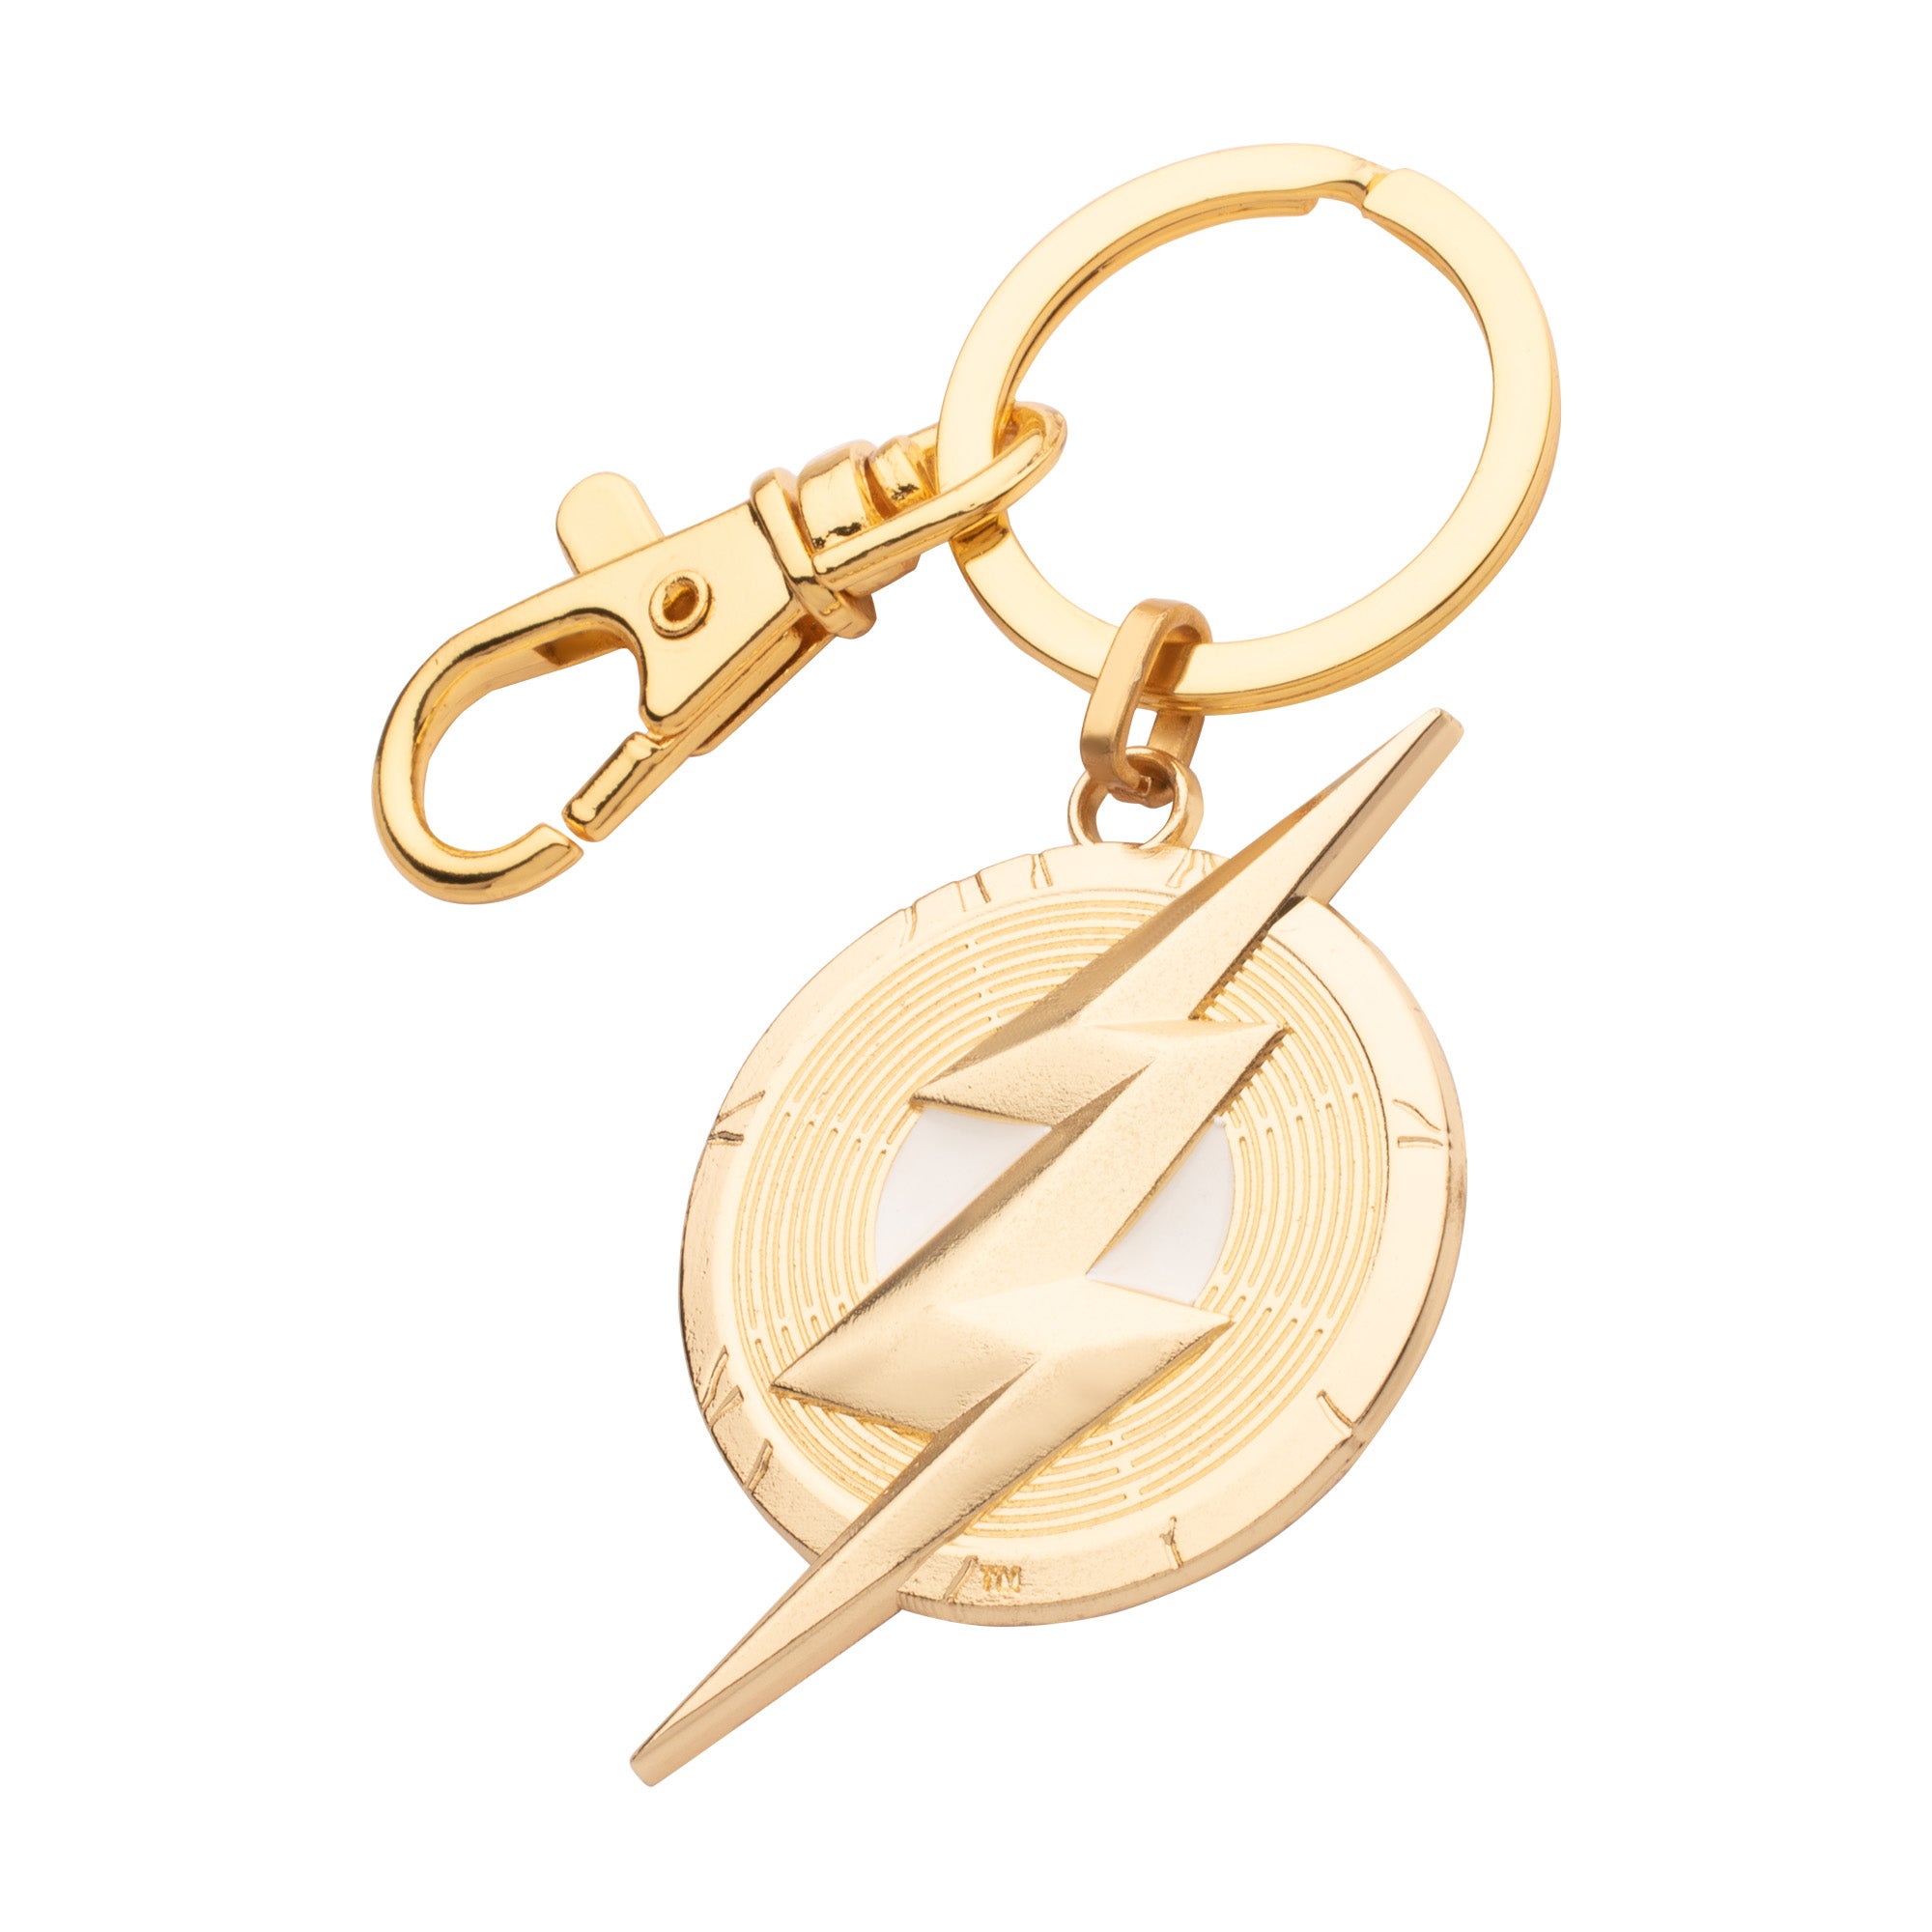 DC Comics The Flash Logo Chest Keychain